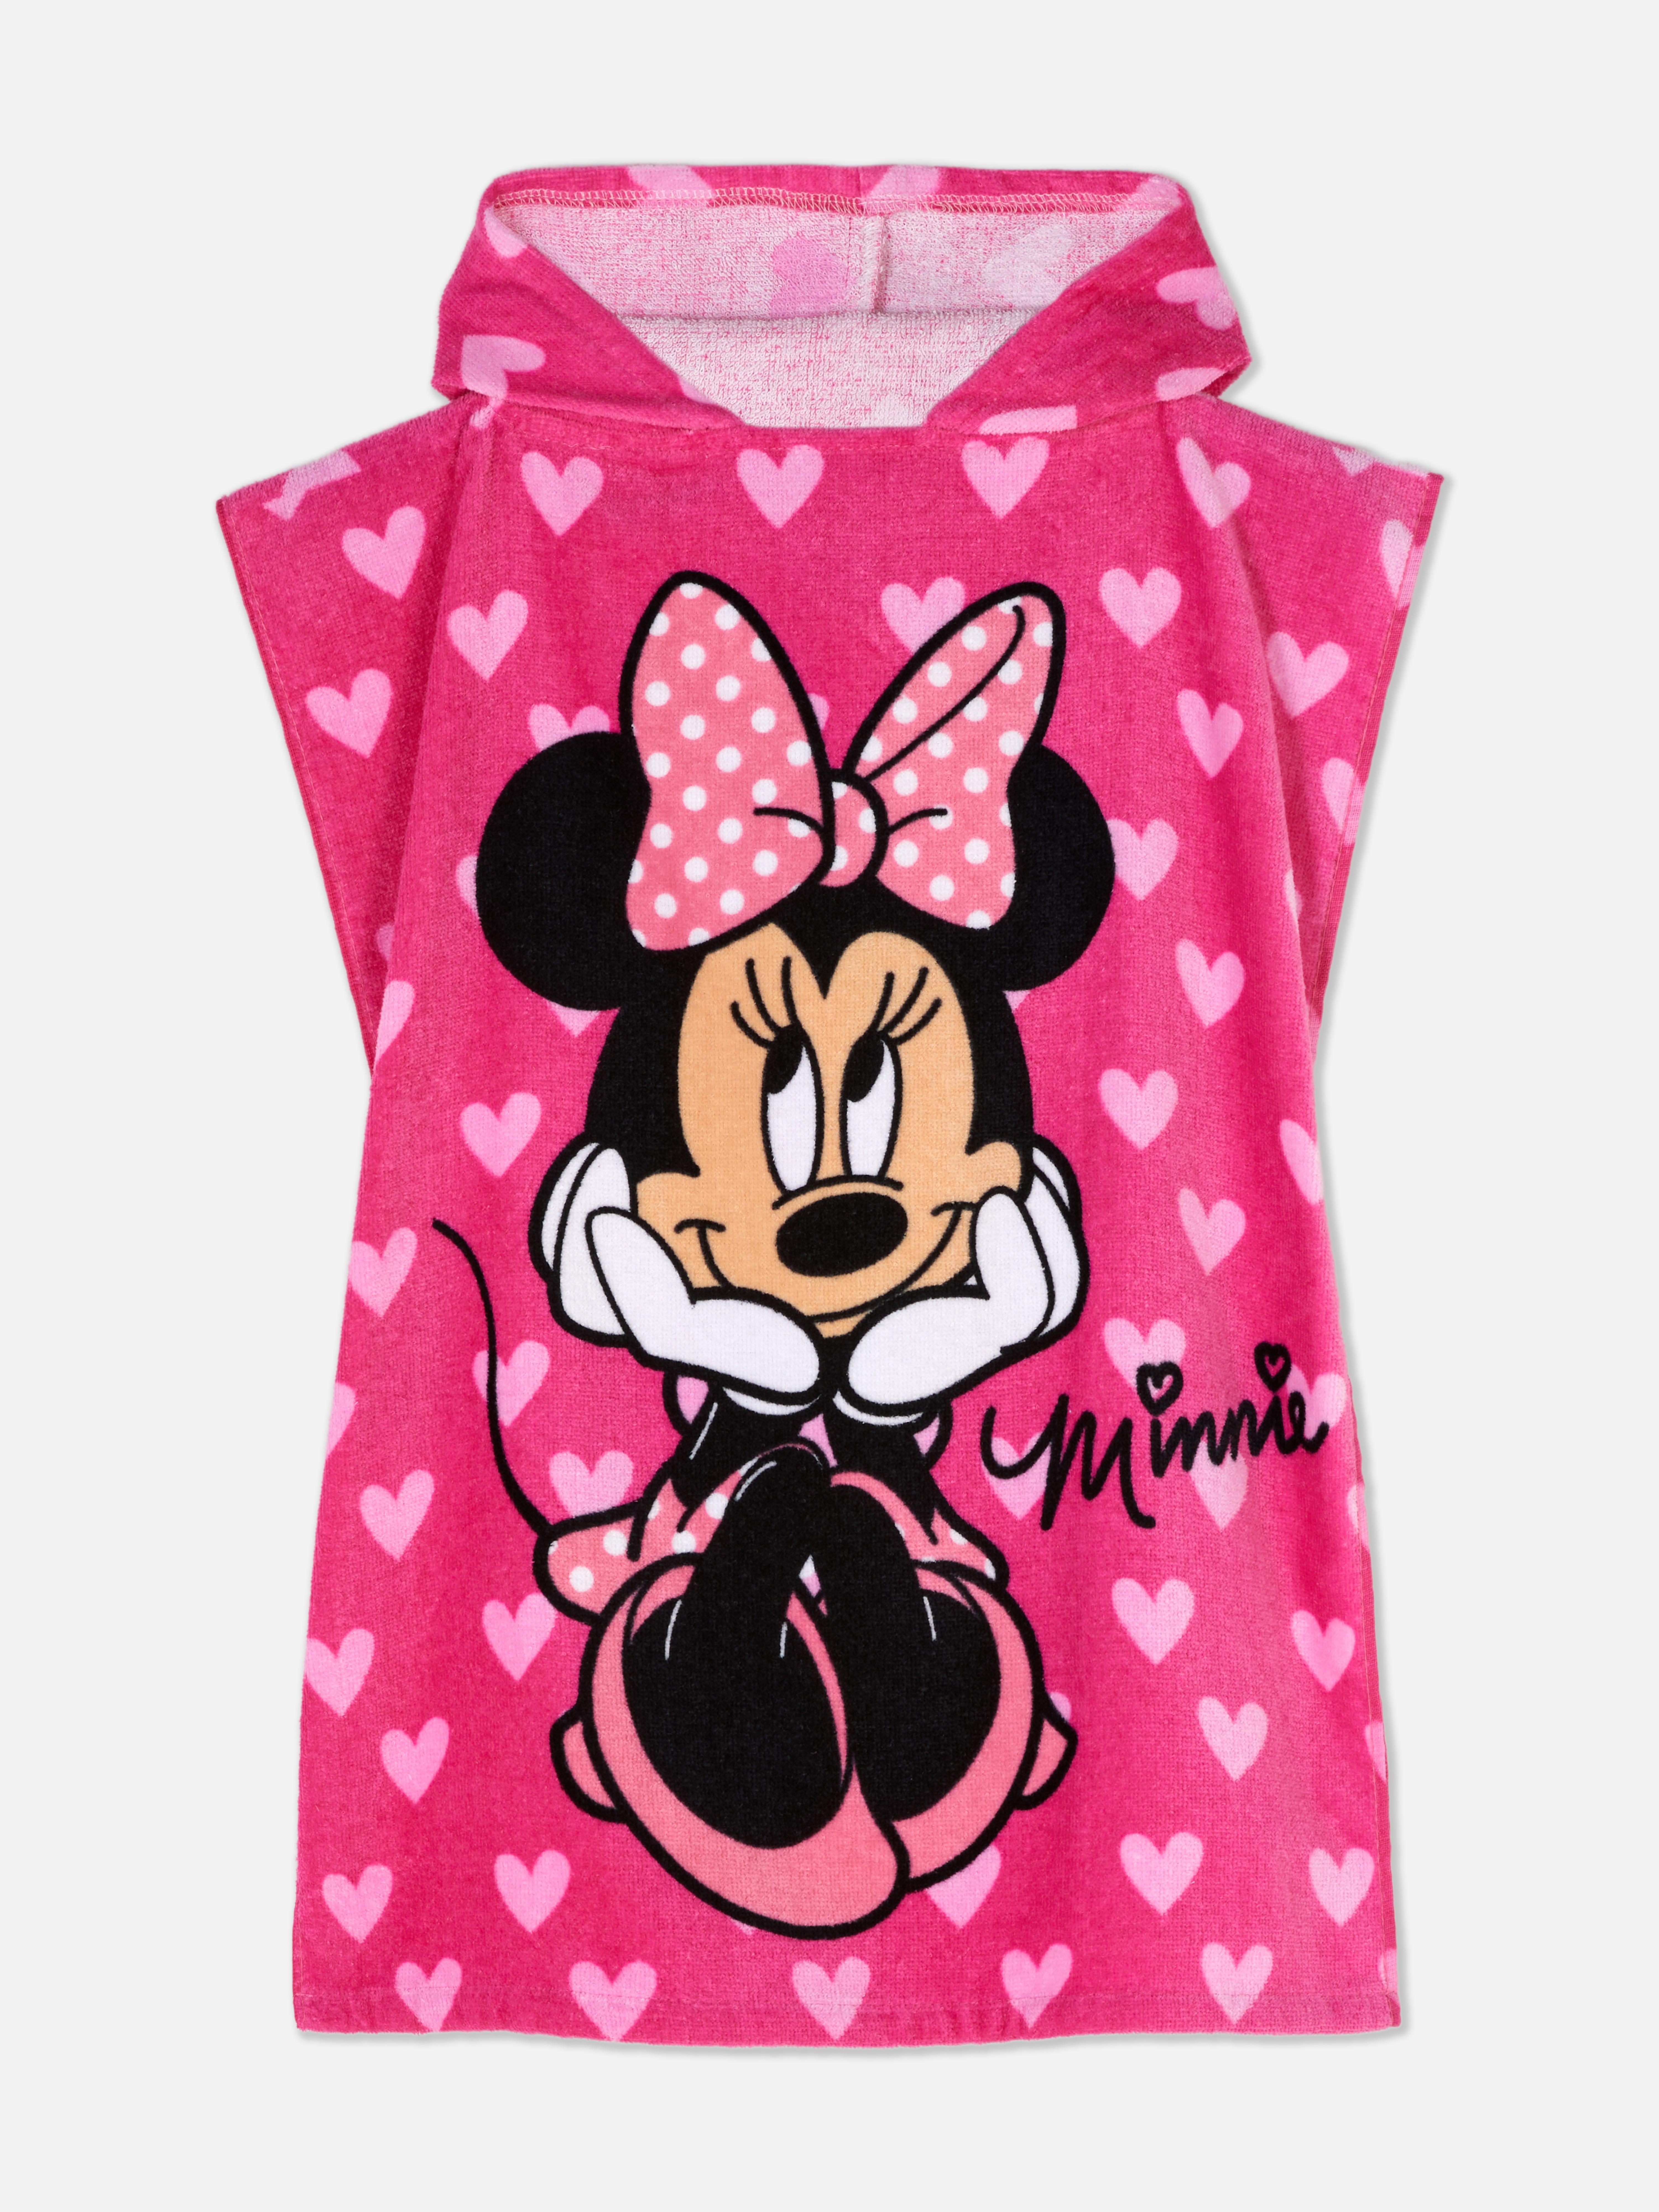 Disney’s Minnie Mouse Towelling Poncho poncho